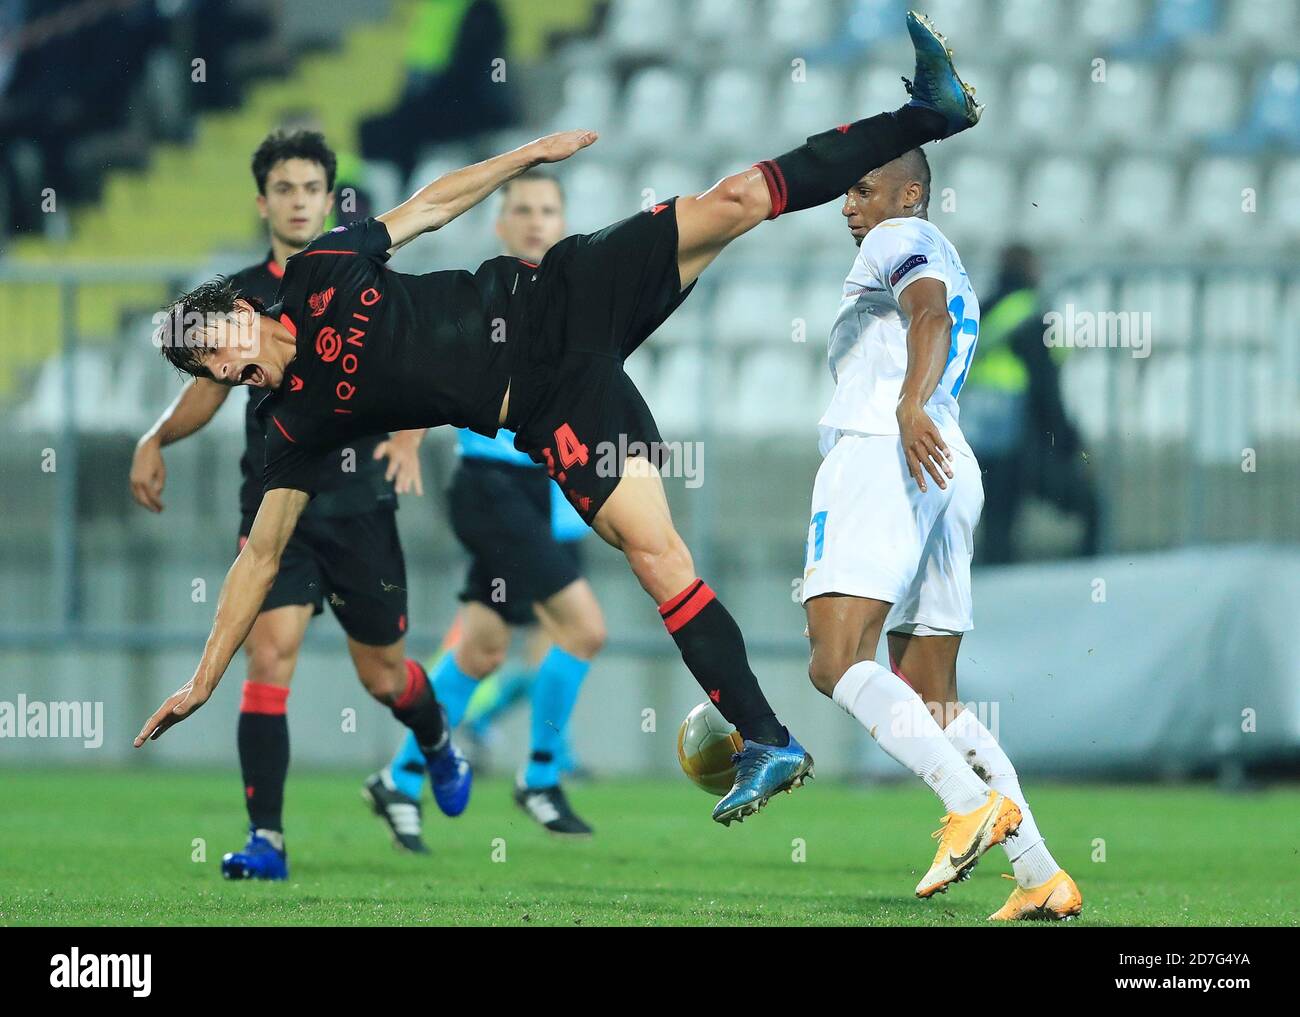 Ferencvarosi TC vs. HNK Rijeka UEFA EL football match – Stock Editorial  Photo © szirtesi #50128531